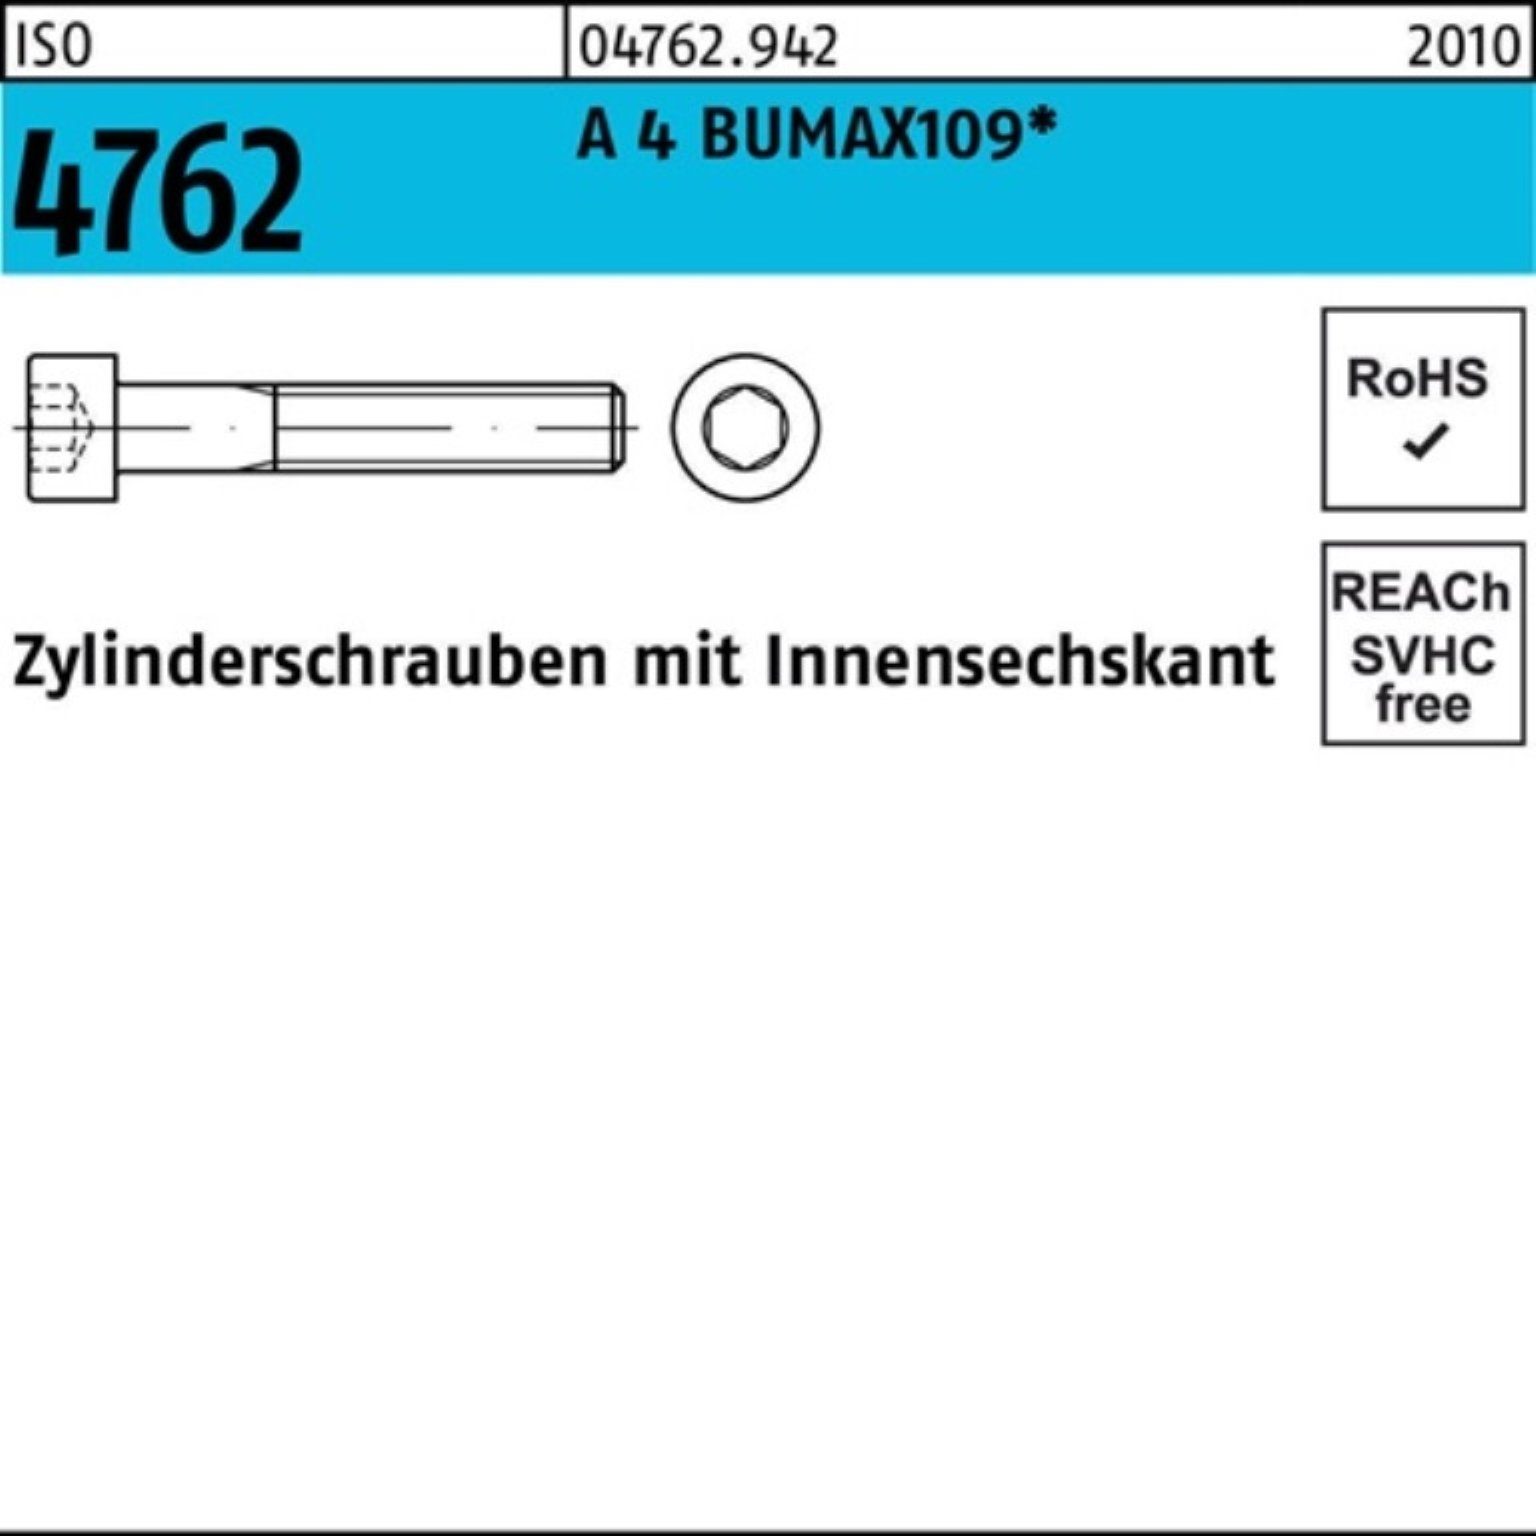 Bufab Zylinderschraube 100er Pack Zylinderschraube ISO 4762 Innen-6kt M16x 50 A 4 BUMAX109 25